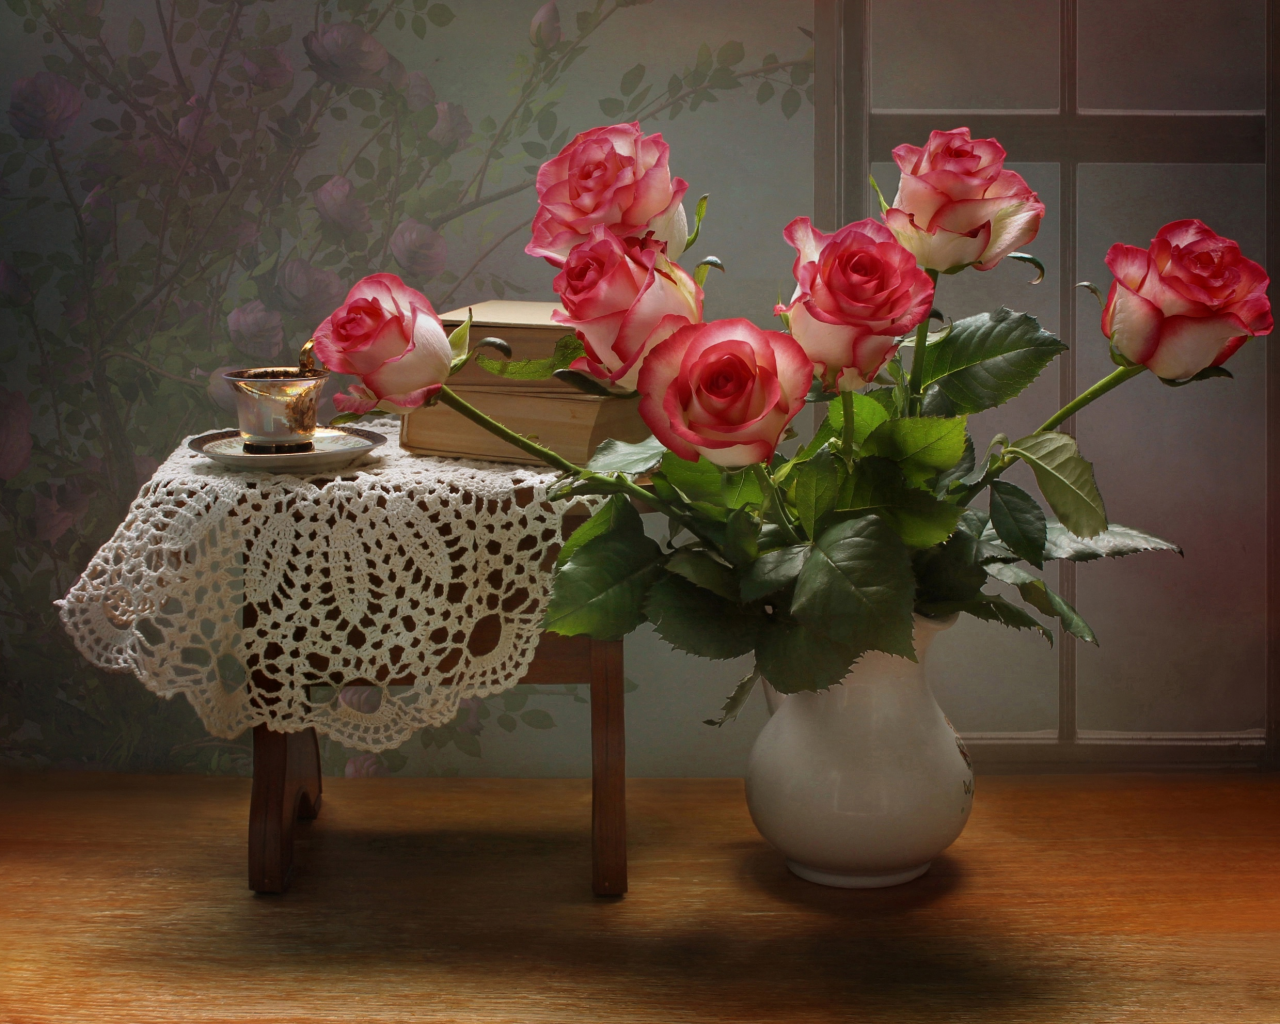 розы, чашка, табурет, книги, блюдце, ваза, цветы